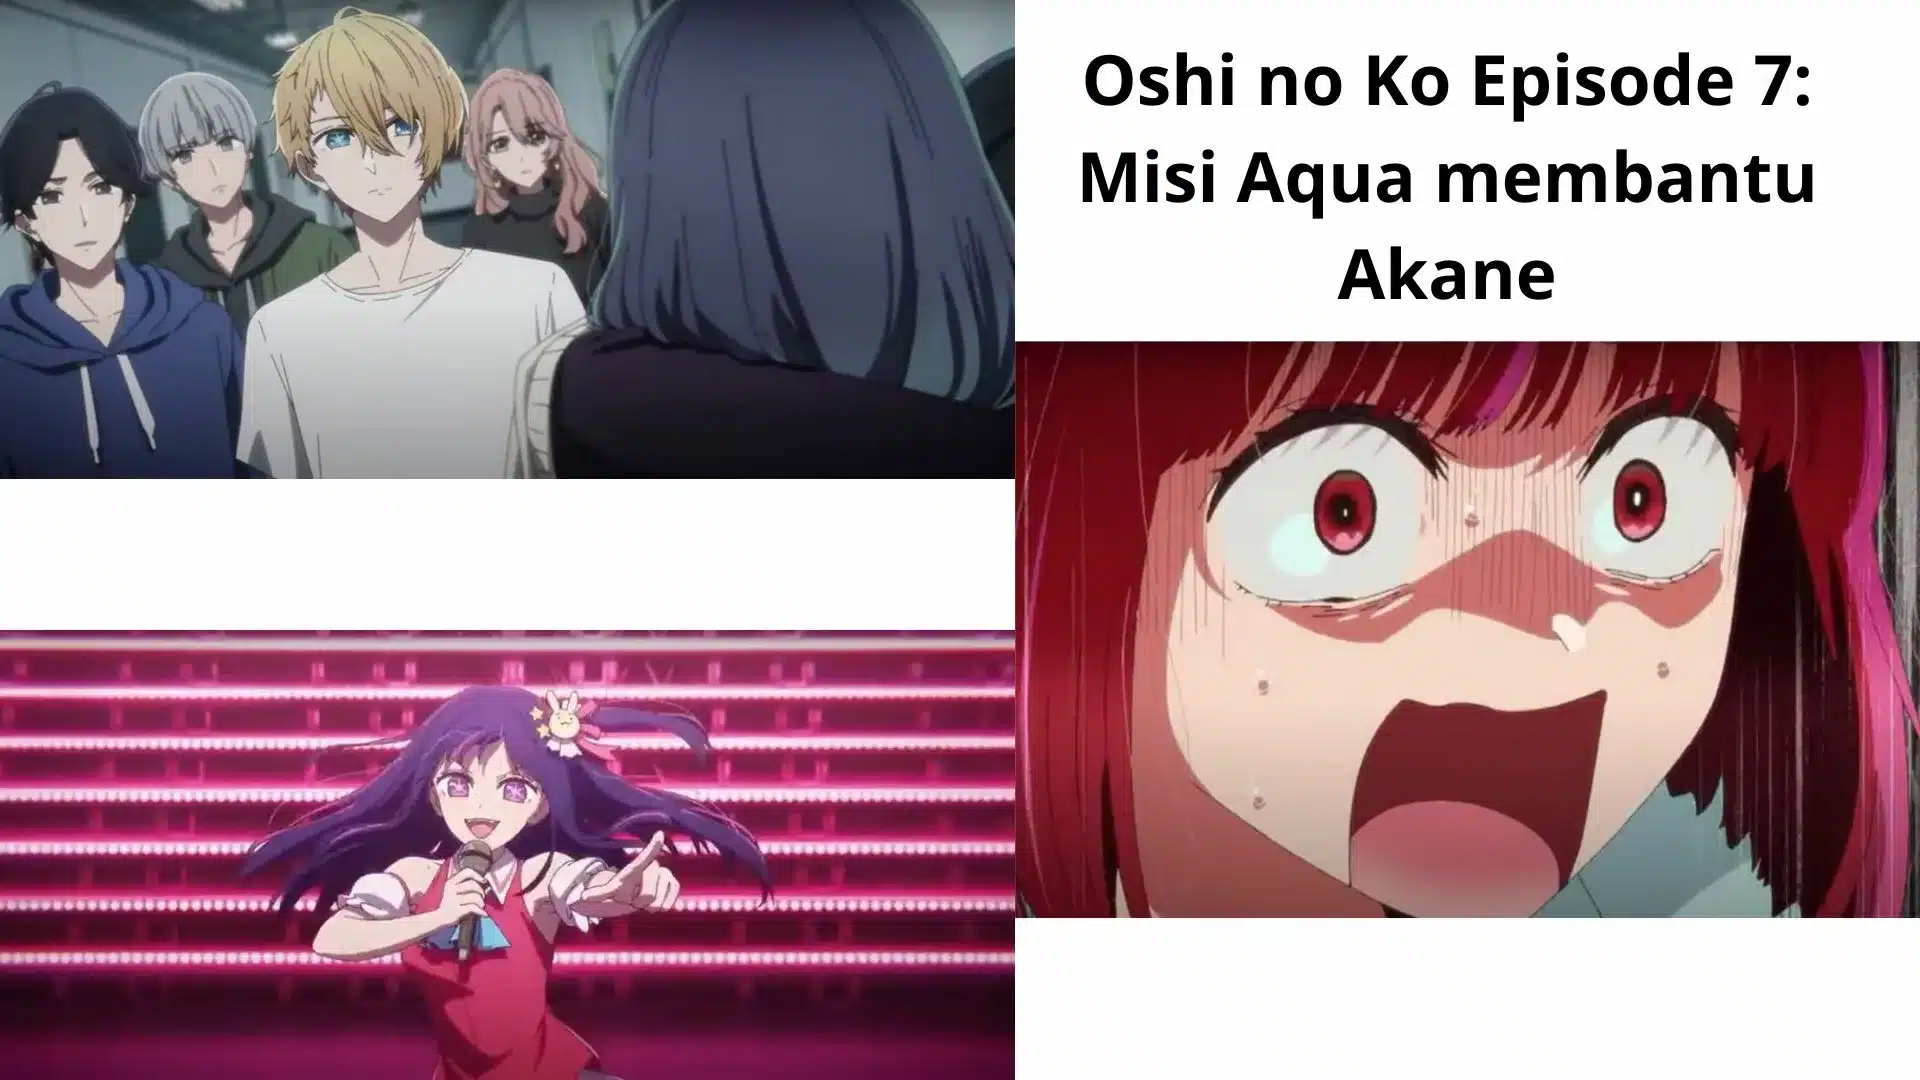 Oshi no Ko Episode 7: Misi Aqua membantu Akane